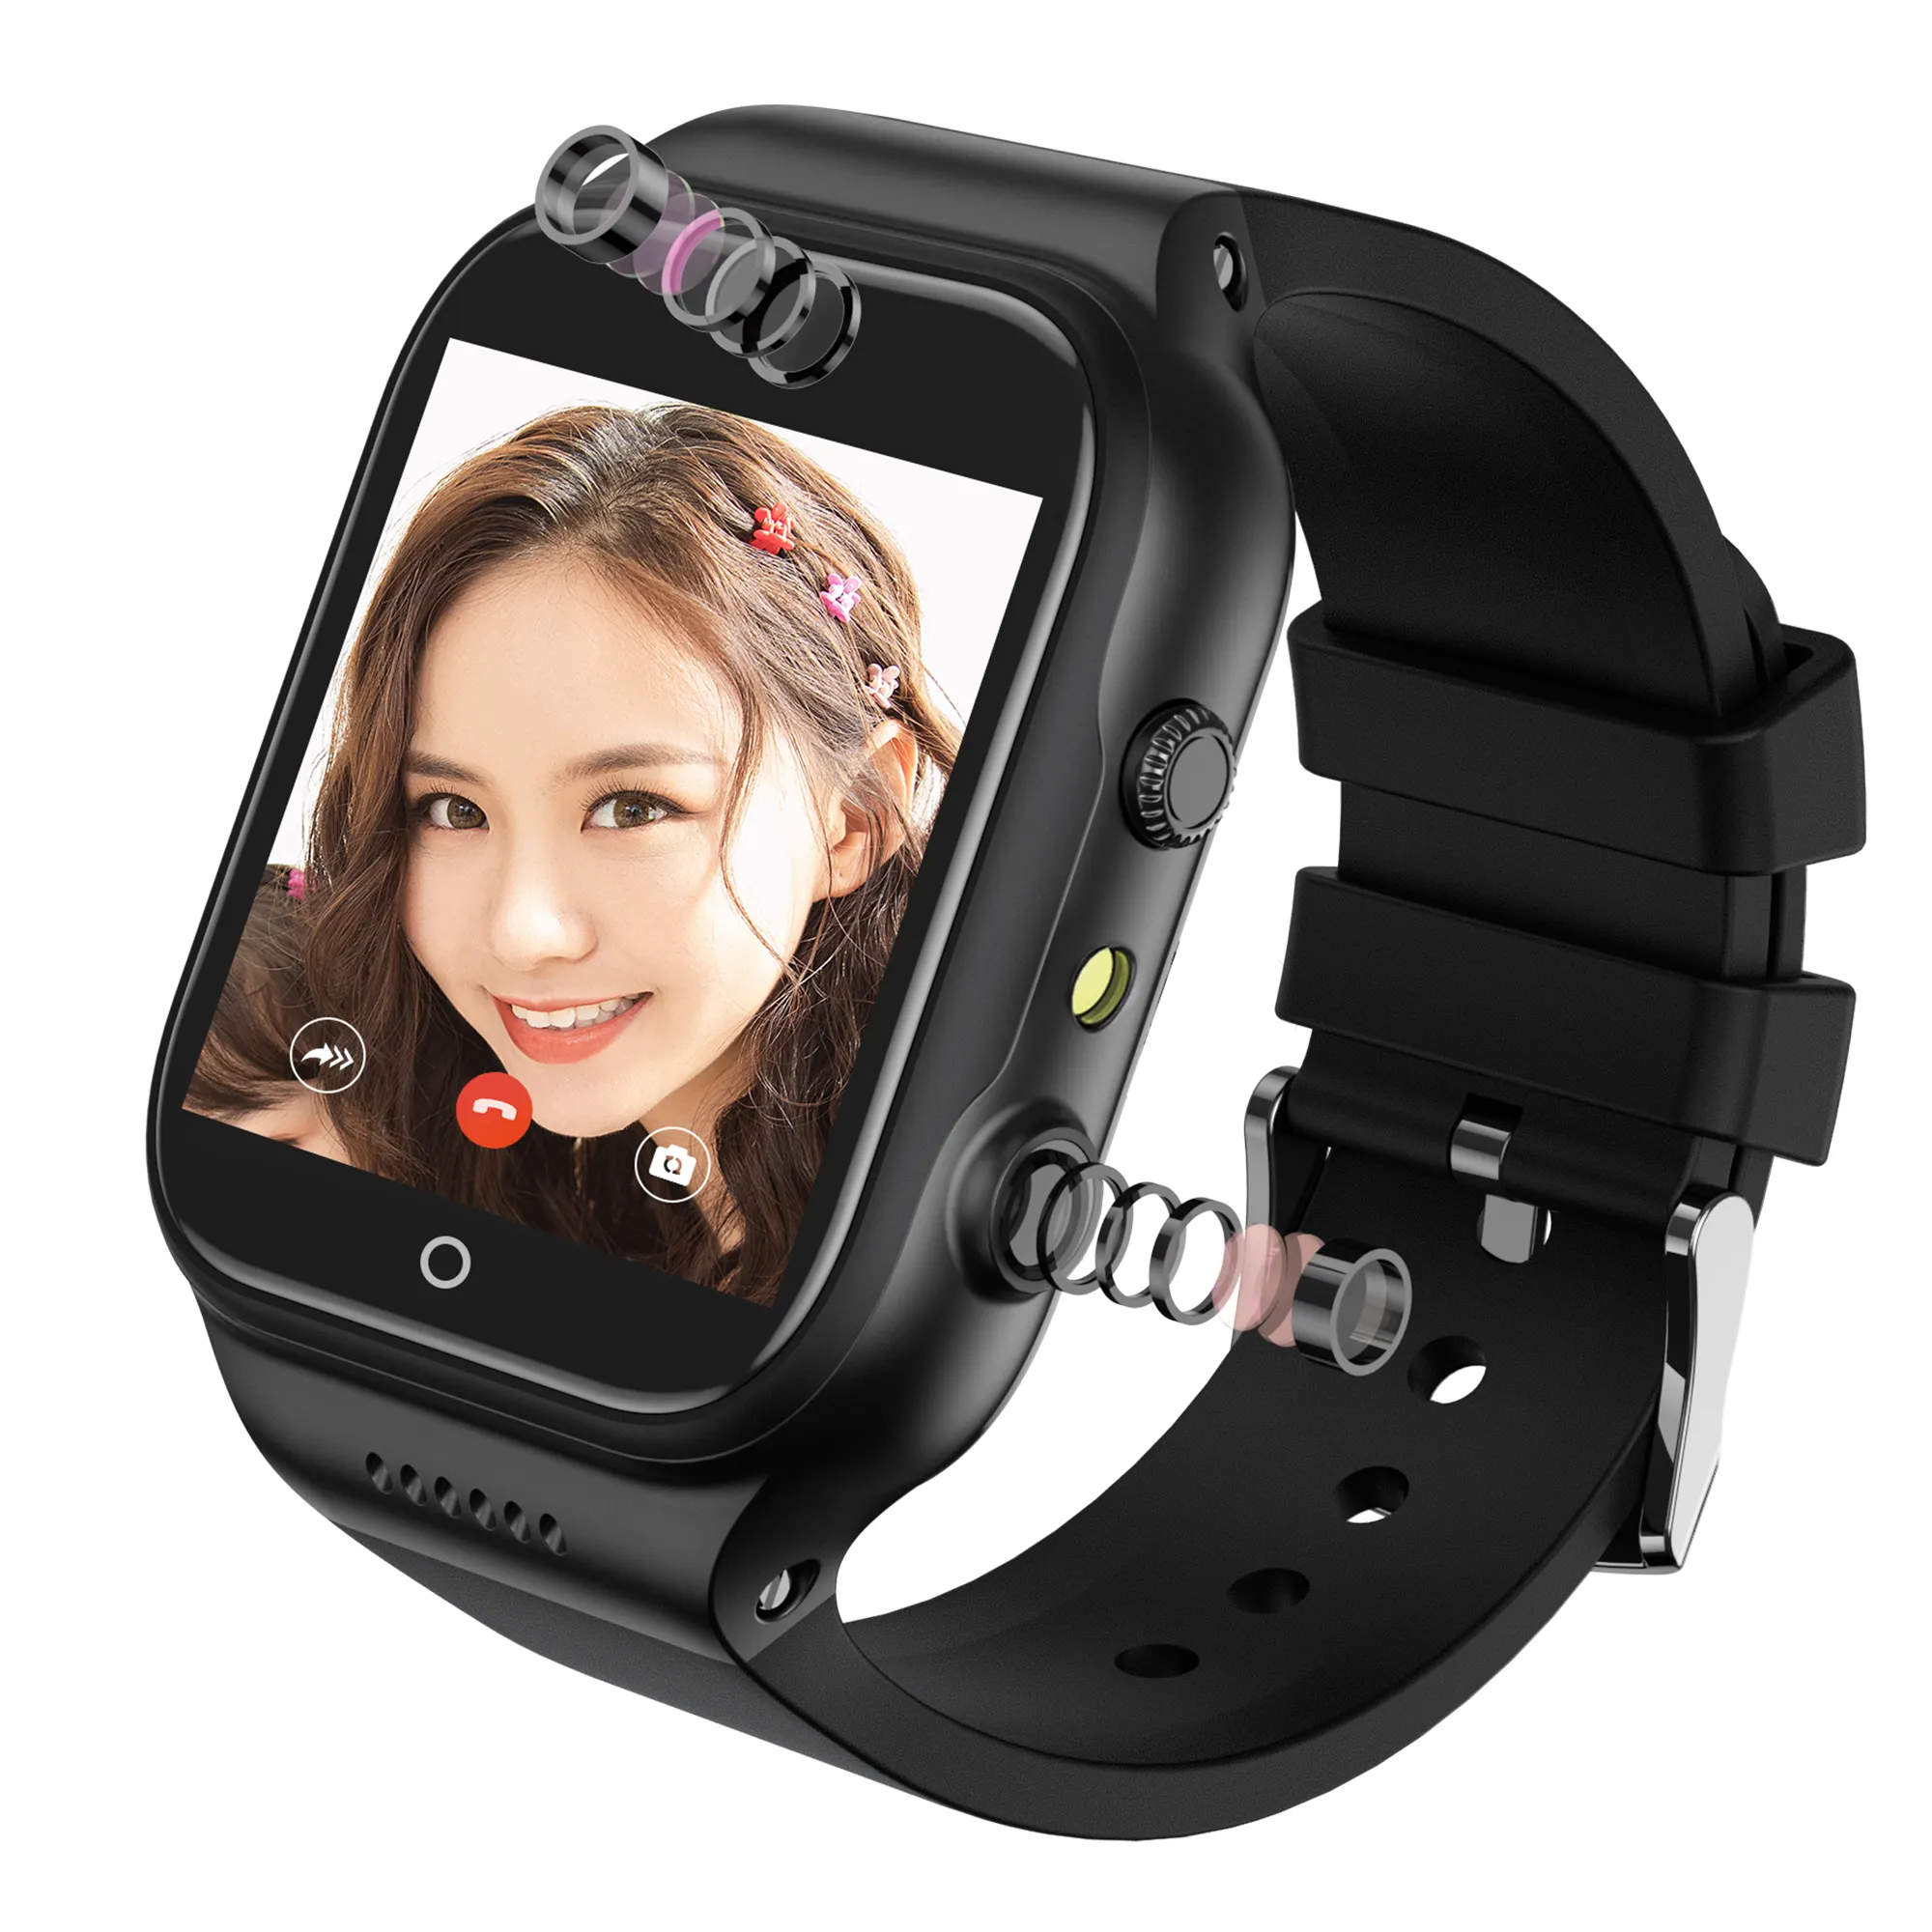 Zinc alloy 2 HD camera 1.54 inch sim card 900mah download popular app sports modes music play 4G internet x89-2 smart watch